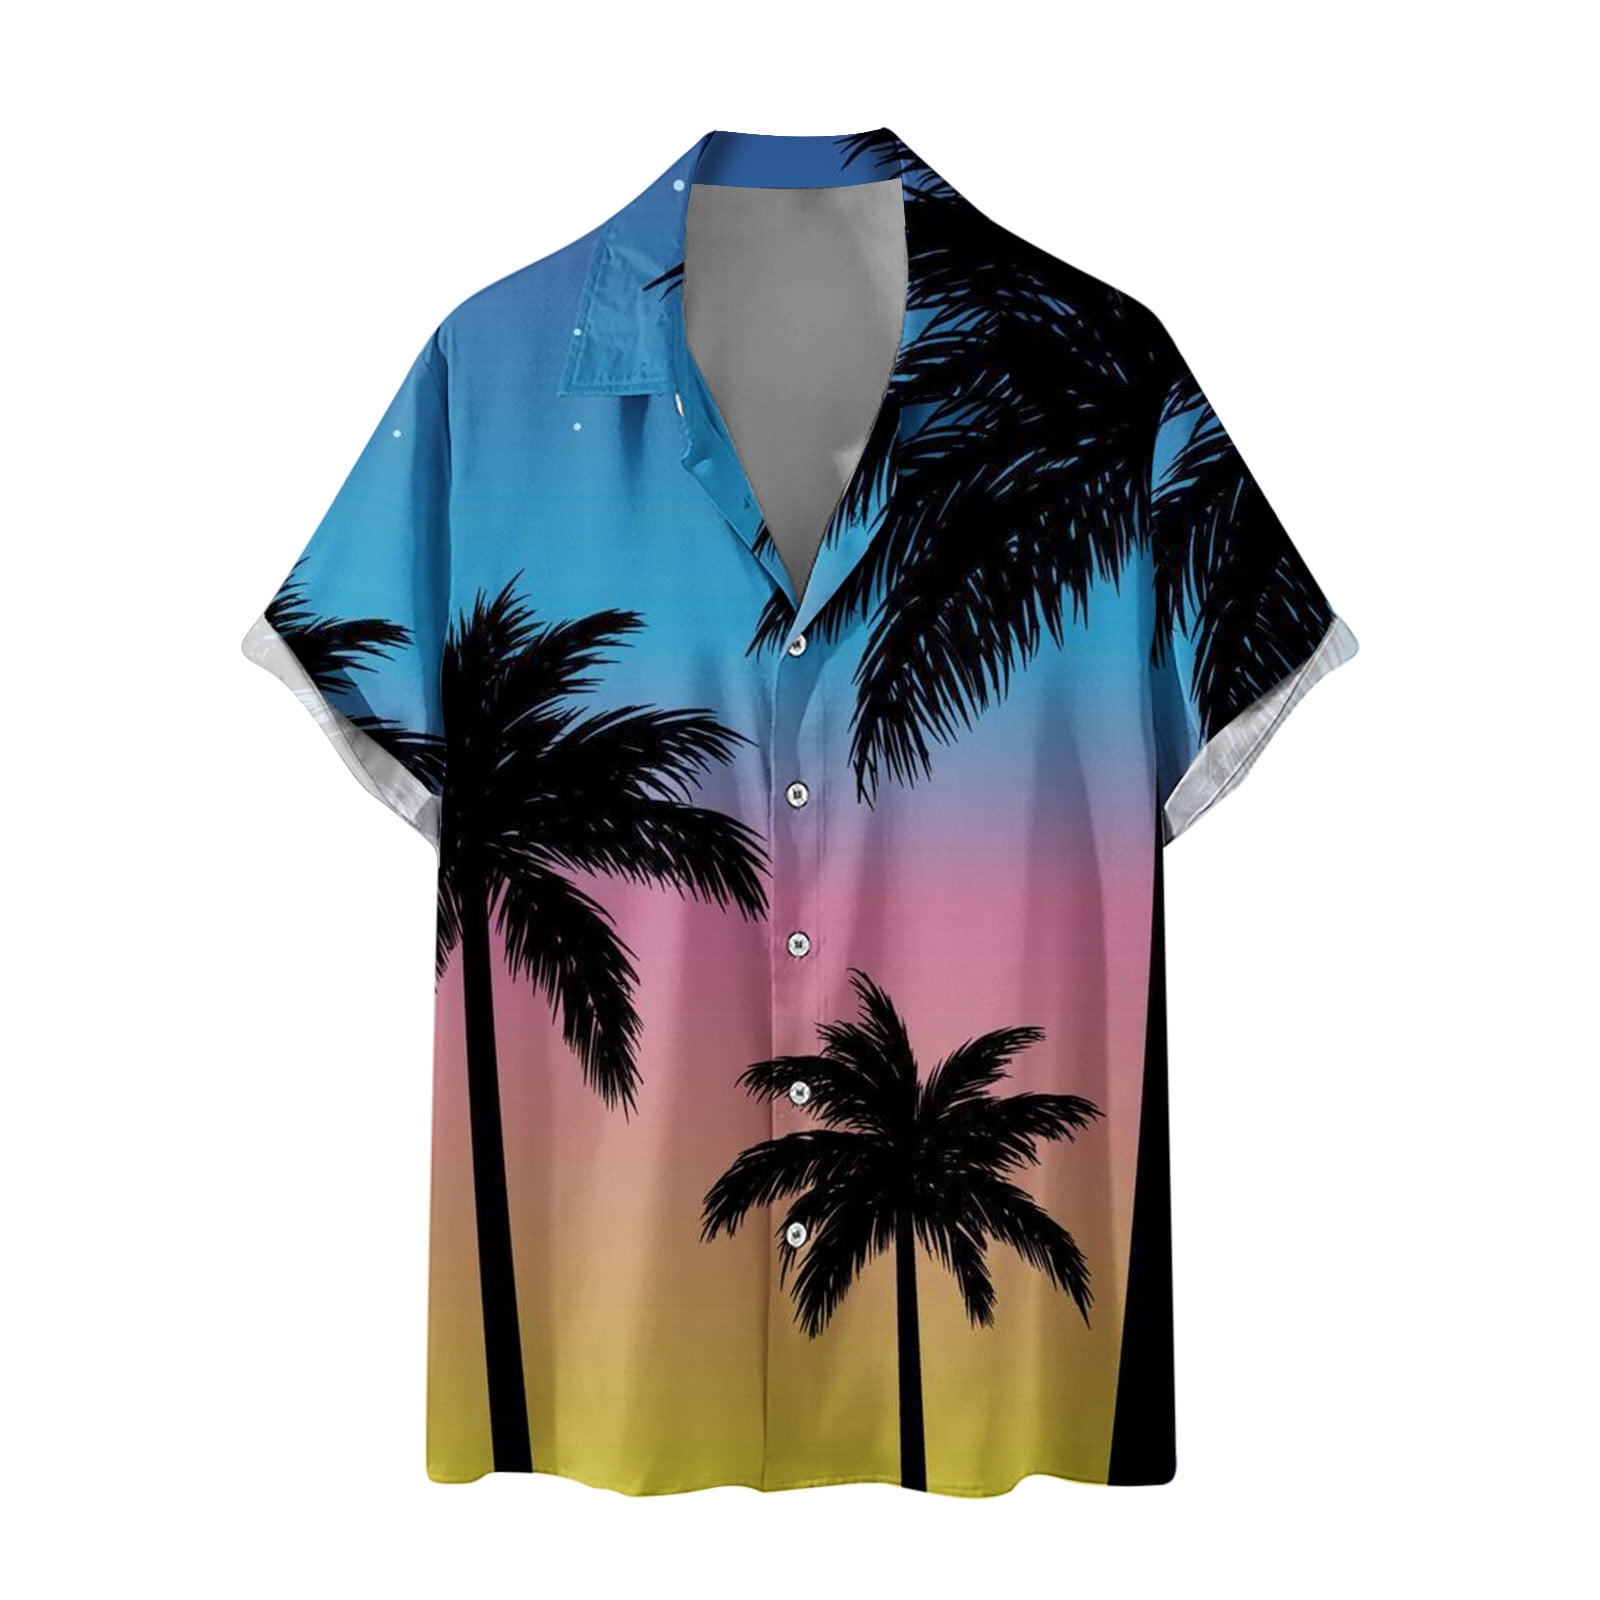 ZCFZJW Hawaiian Beach Shirts for Men Tropical Print Summer Short